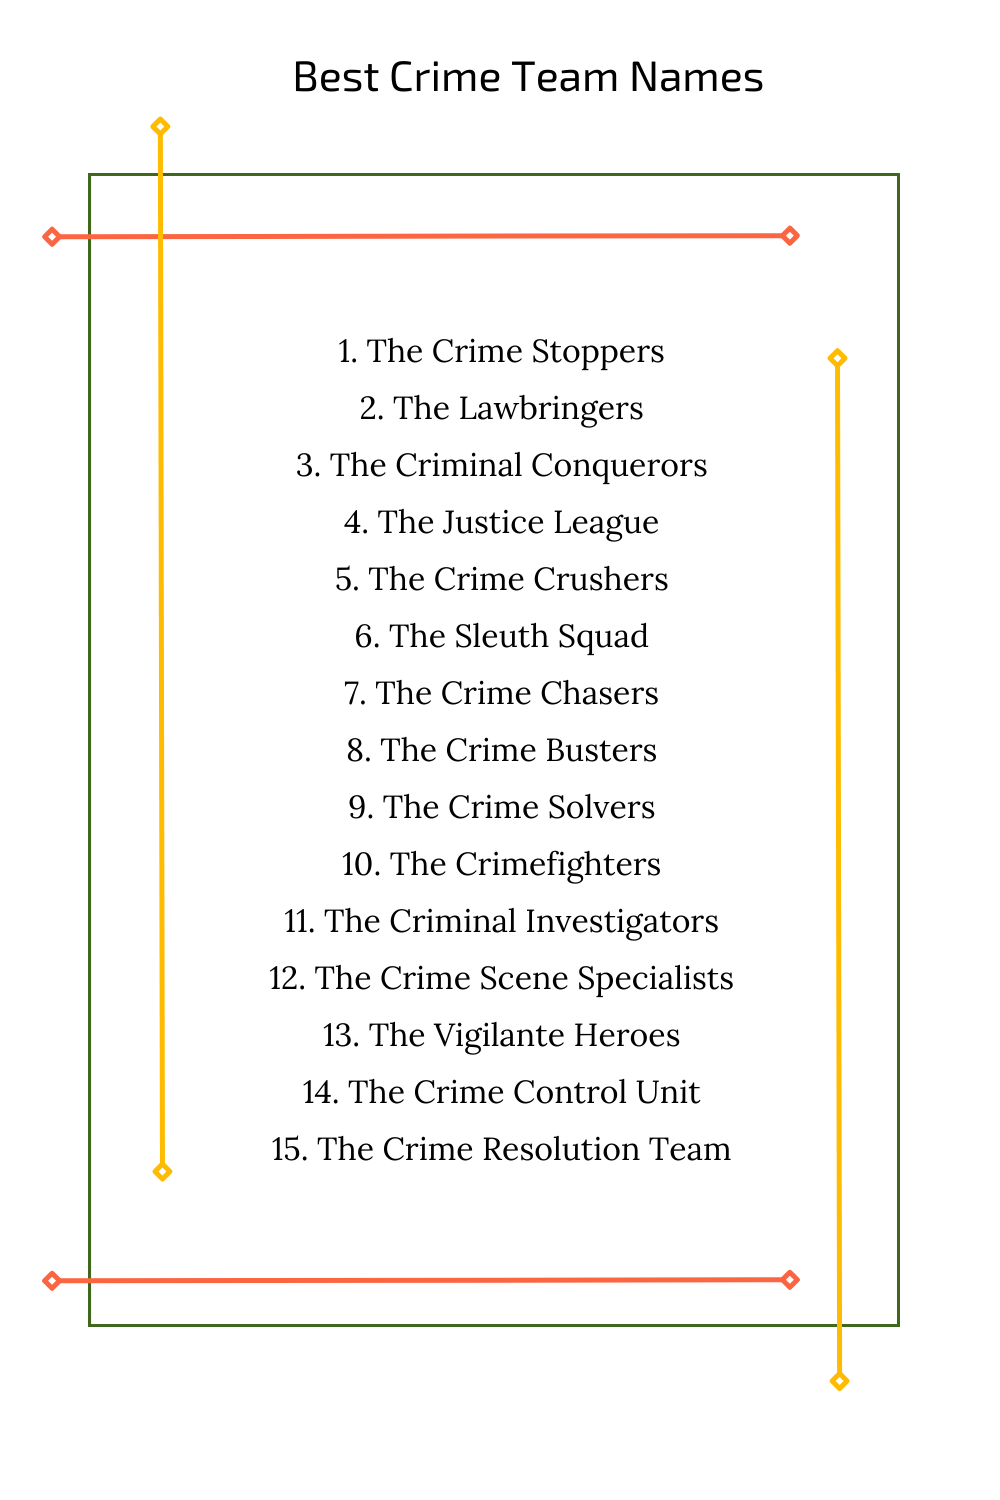 Best Crime Team Names